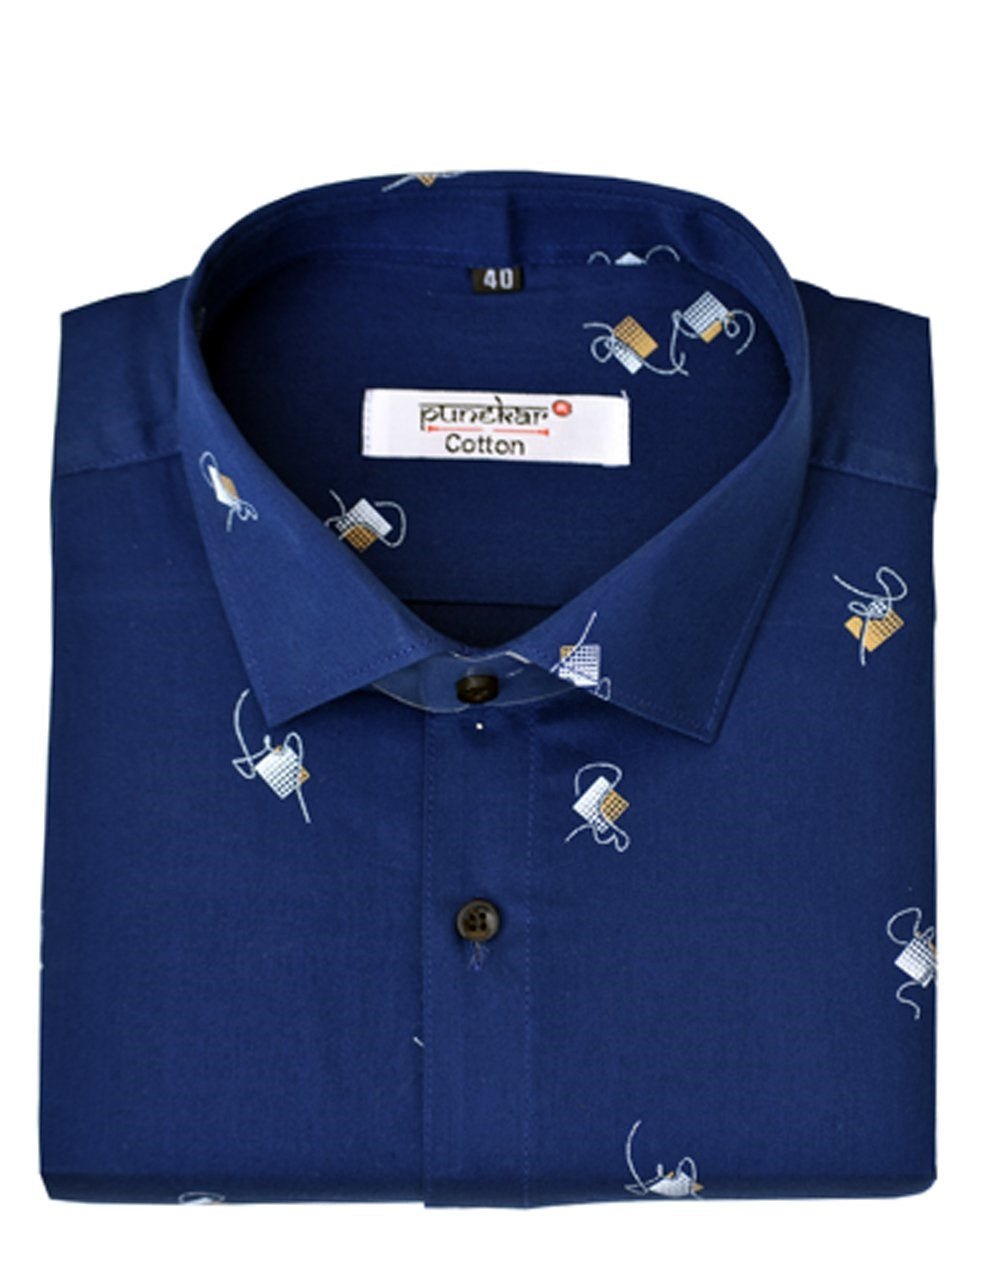 Punekar Cotton Printed Dark Blue Color Pure Cotton Handmade Shirt For Men&